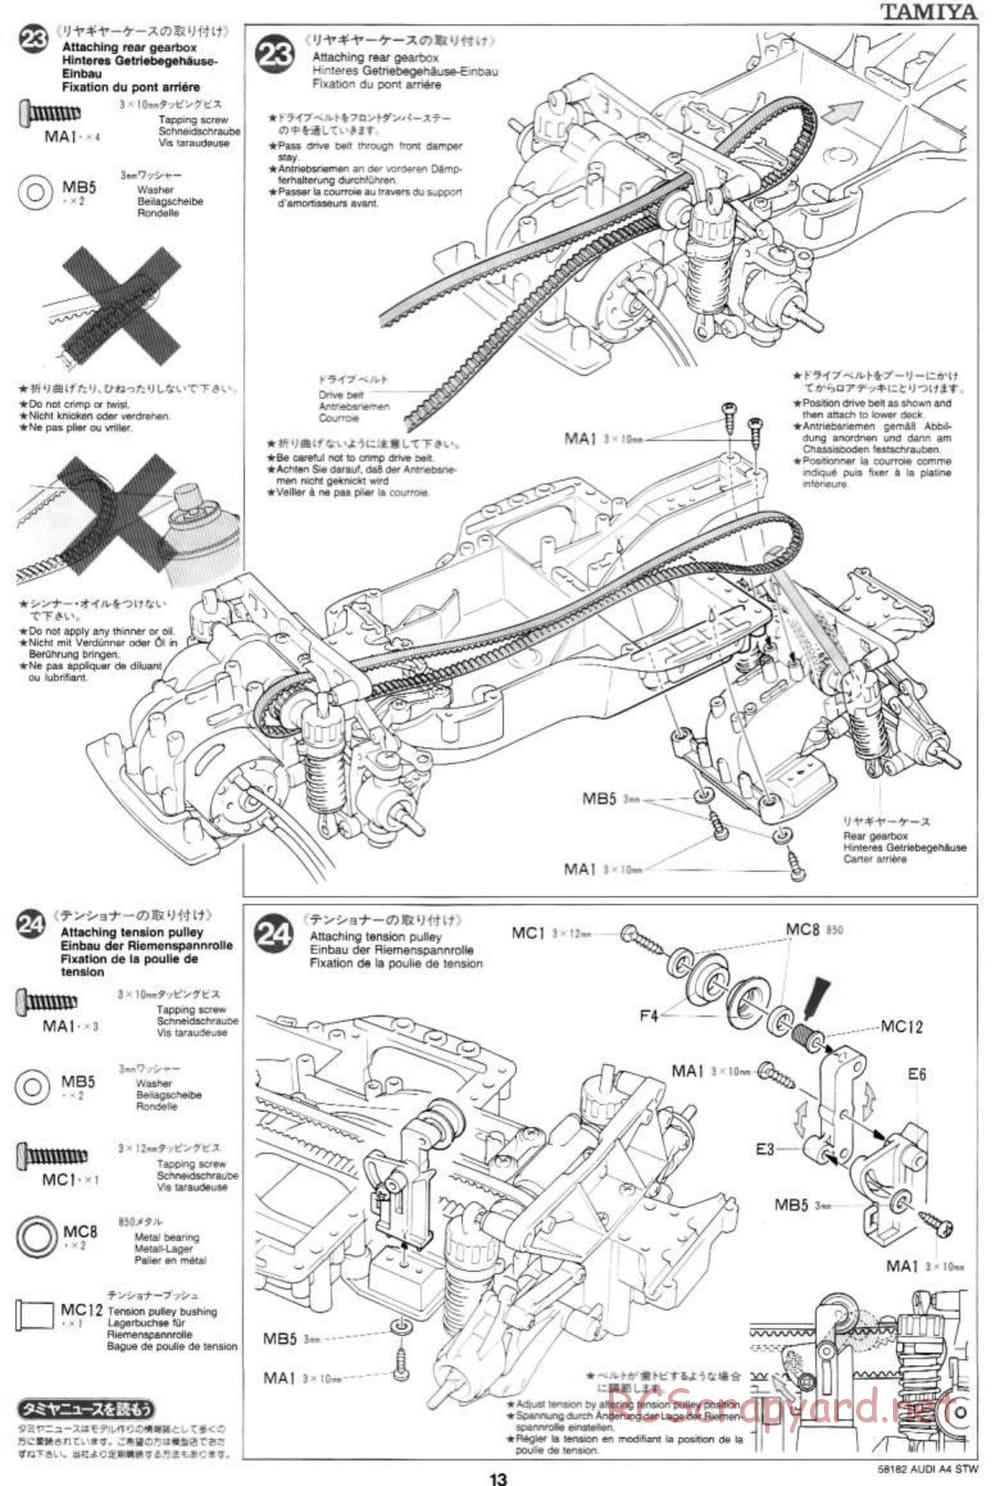 Tamiya - Audi A4 STW - TA-03F Chassis - Manual - Page 13